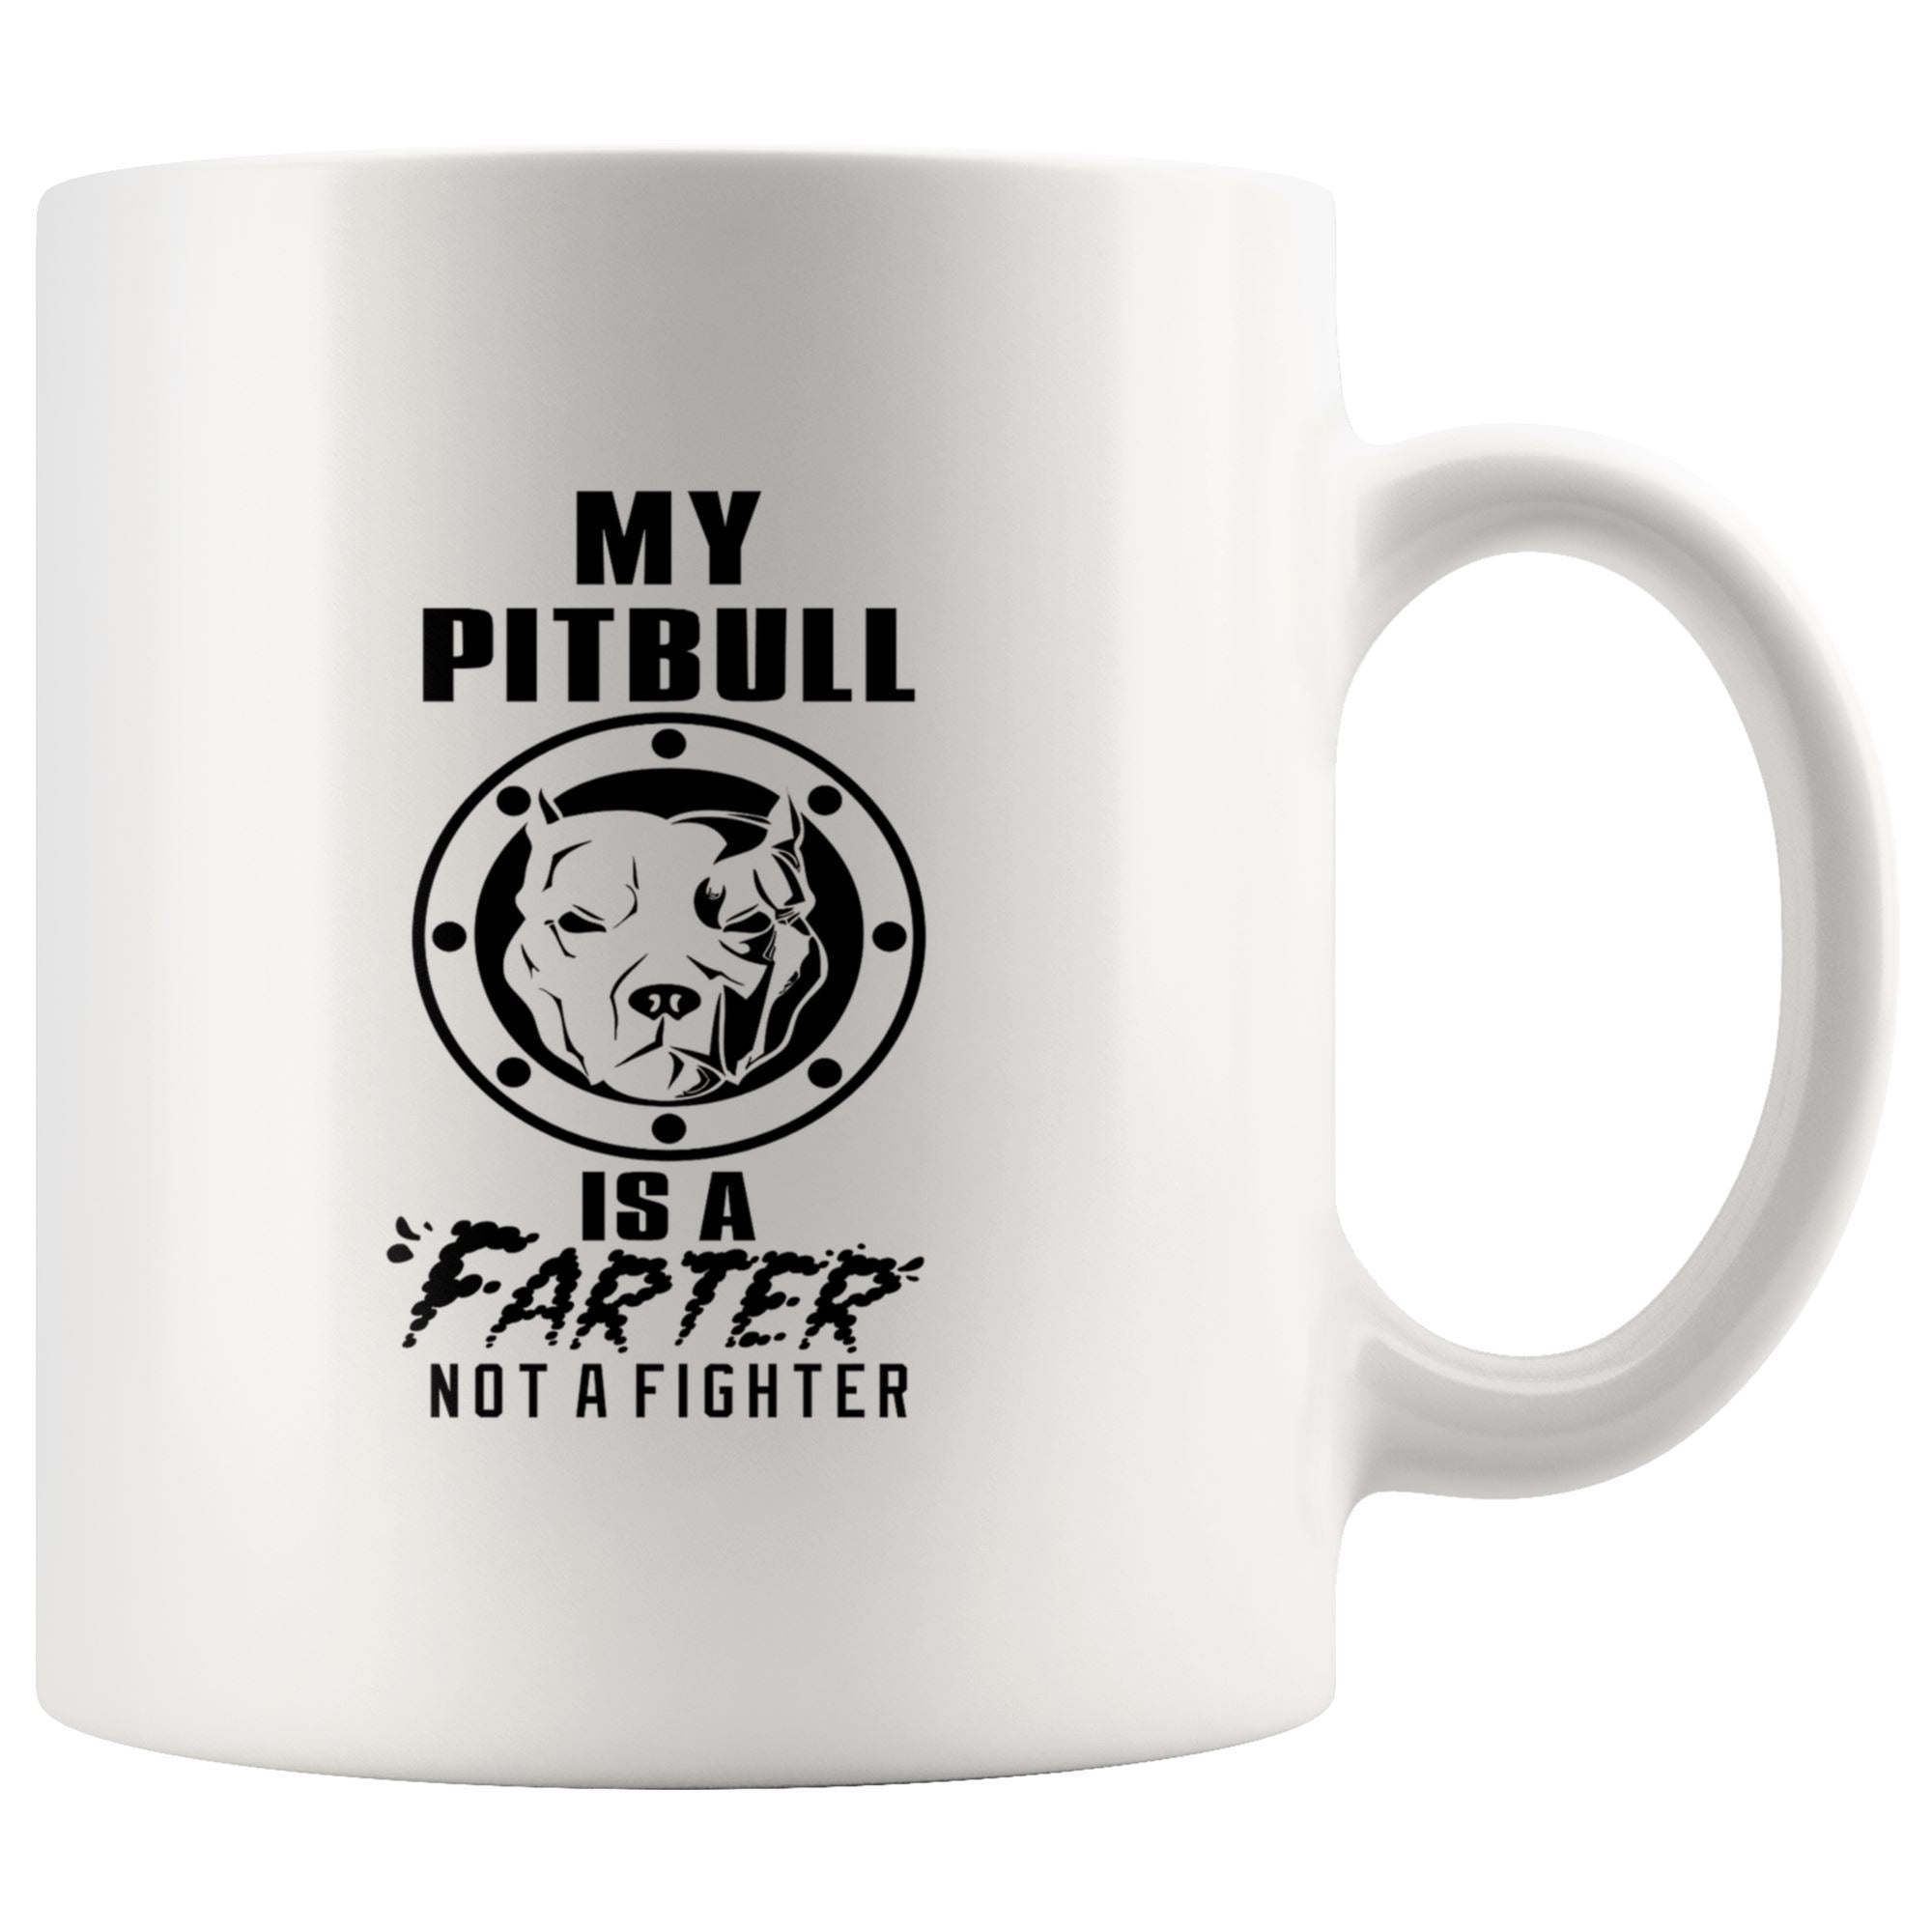 Pitbull Farter Not a Fighter Drinkware teelaunch 11oz Mug 